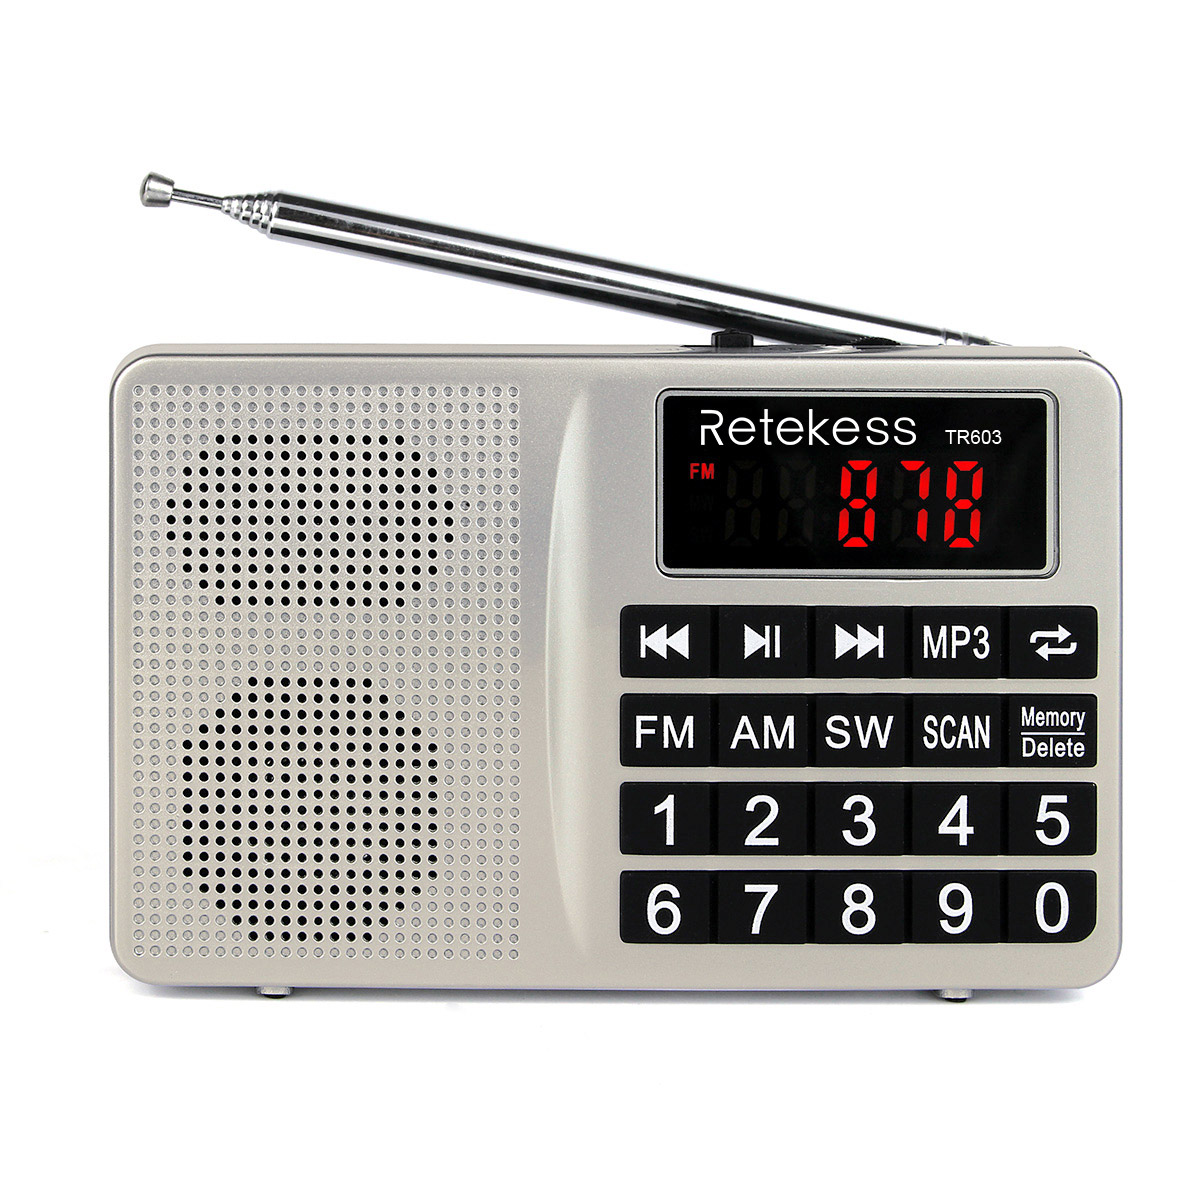 

Retekess Digital Display FM AM SW Radio AUX MP3 Audio Player Speaker for Mobile Phone Gift for family